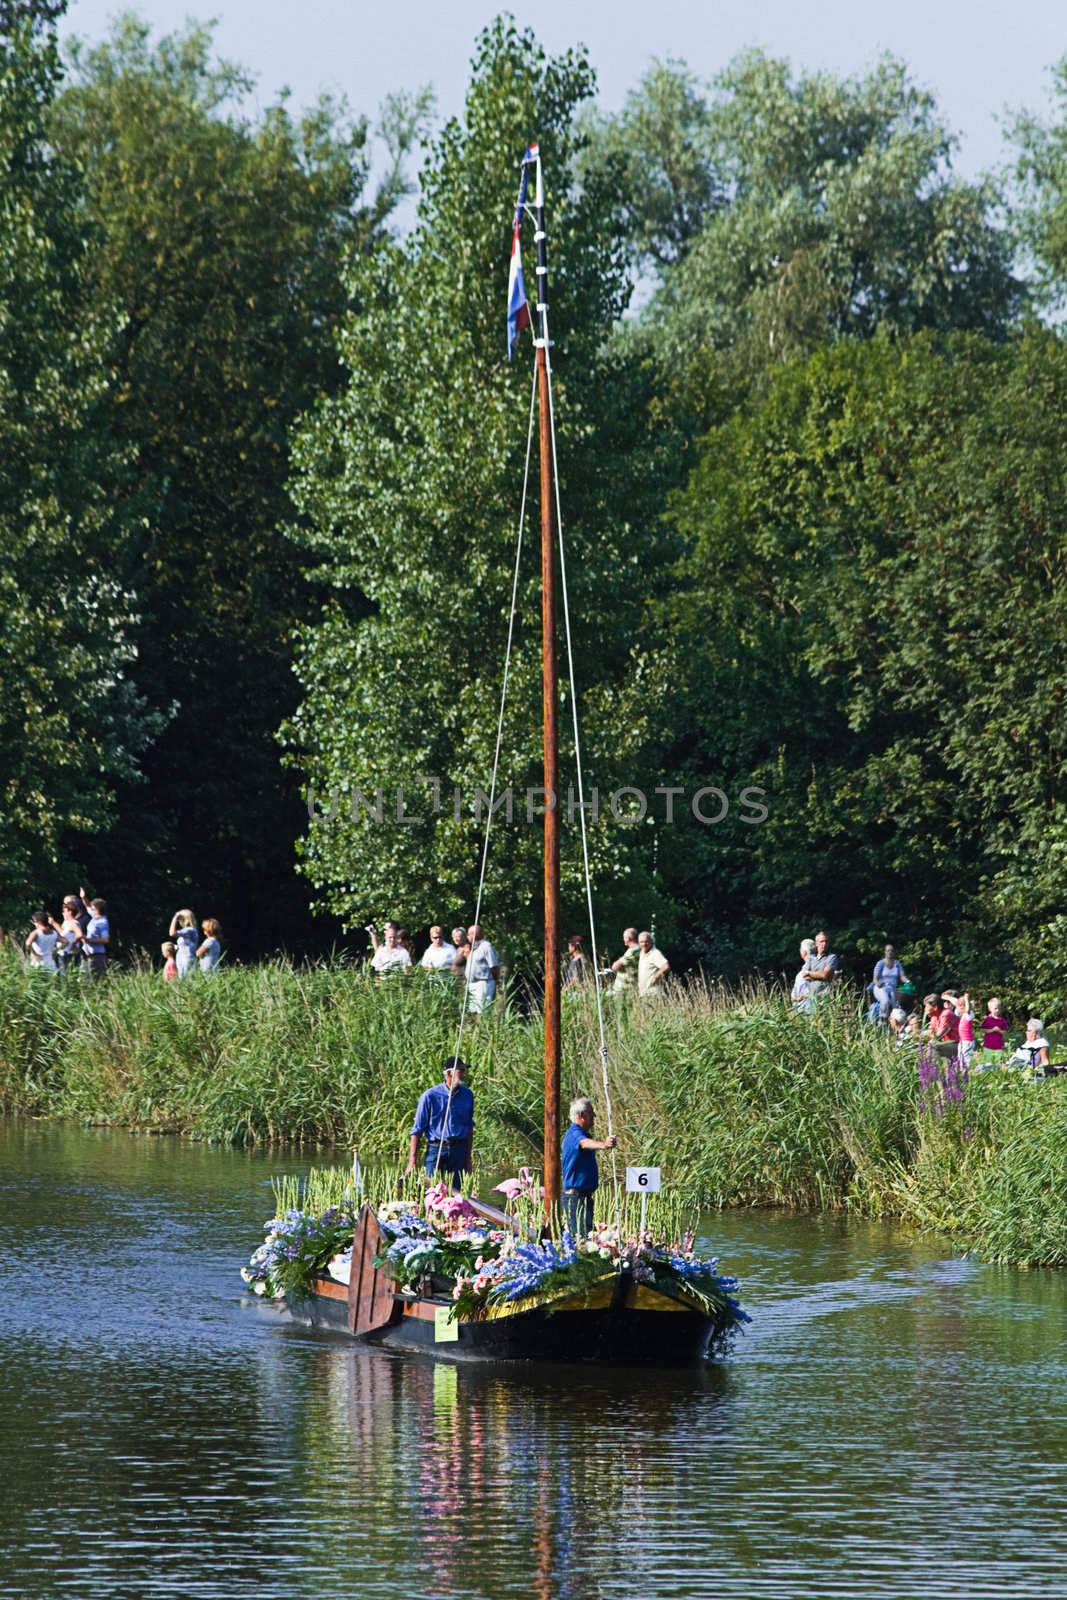 VLAARDINGEN, THE NETHERLANDS - JULI 2010: Beautiful flower boats in the unique annual Westland Floating Parade Juli 30, 2010, Vlaardingen, the Netherlands.

